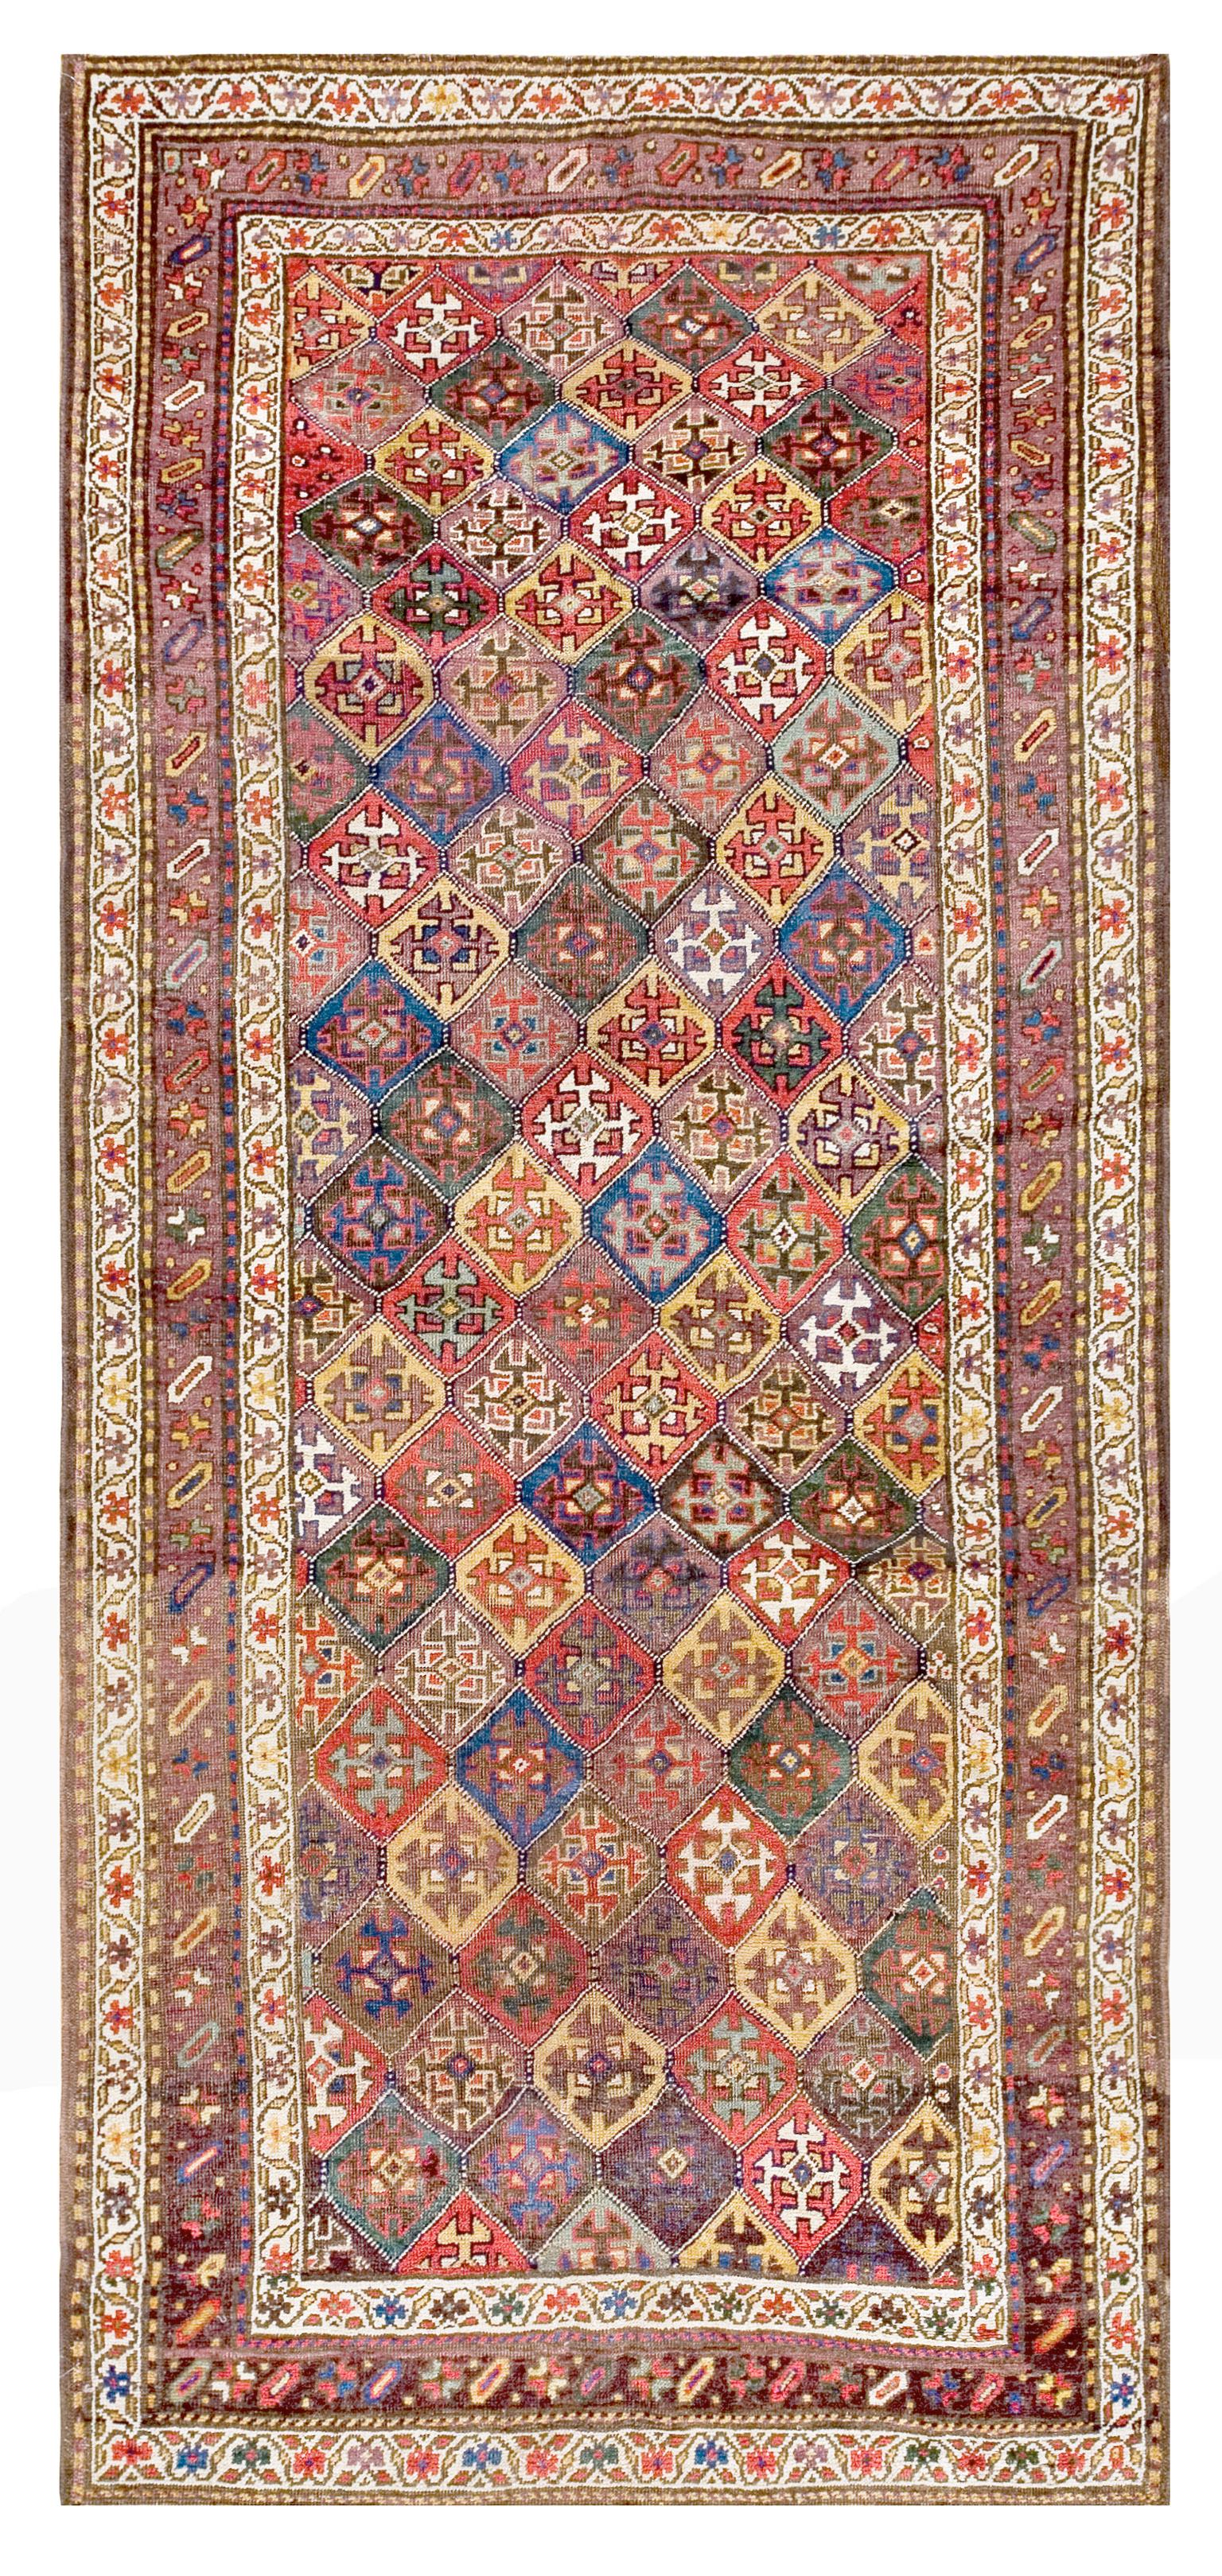 Antique Persian Kurdish rug, size: 4'2